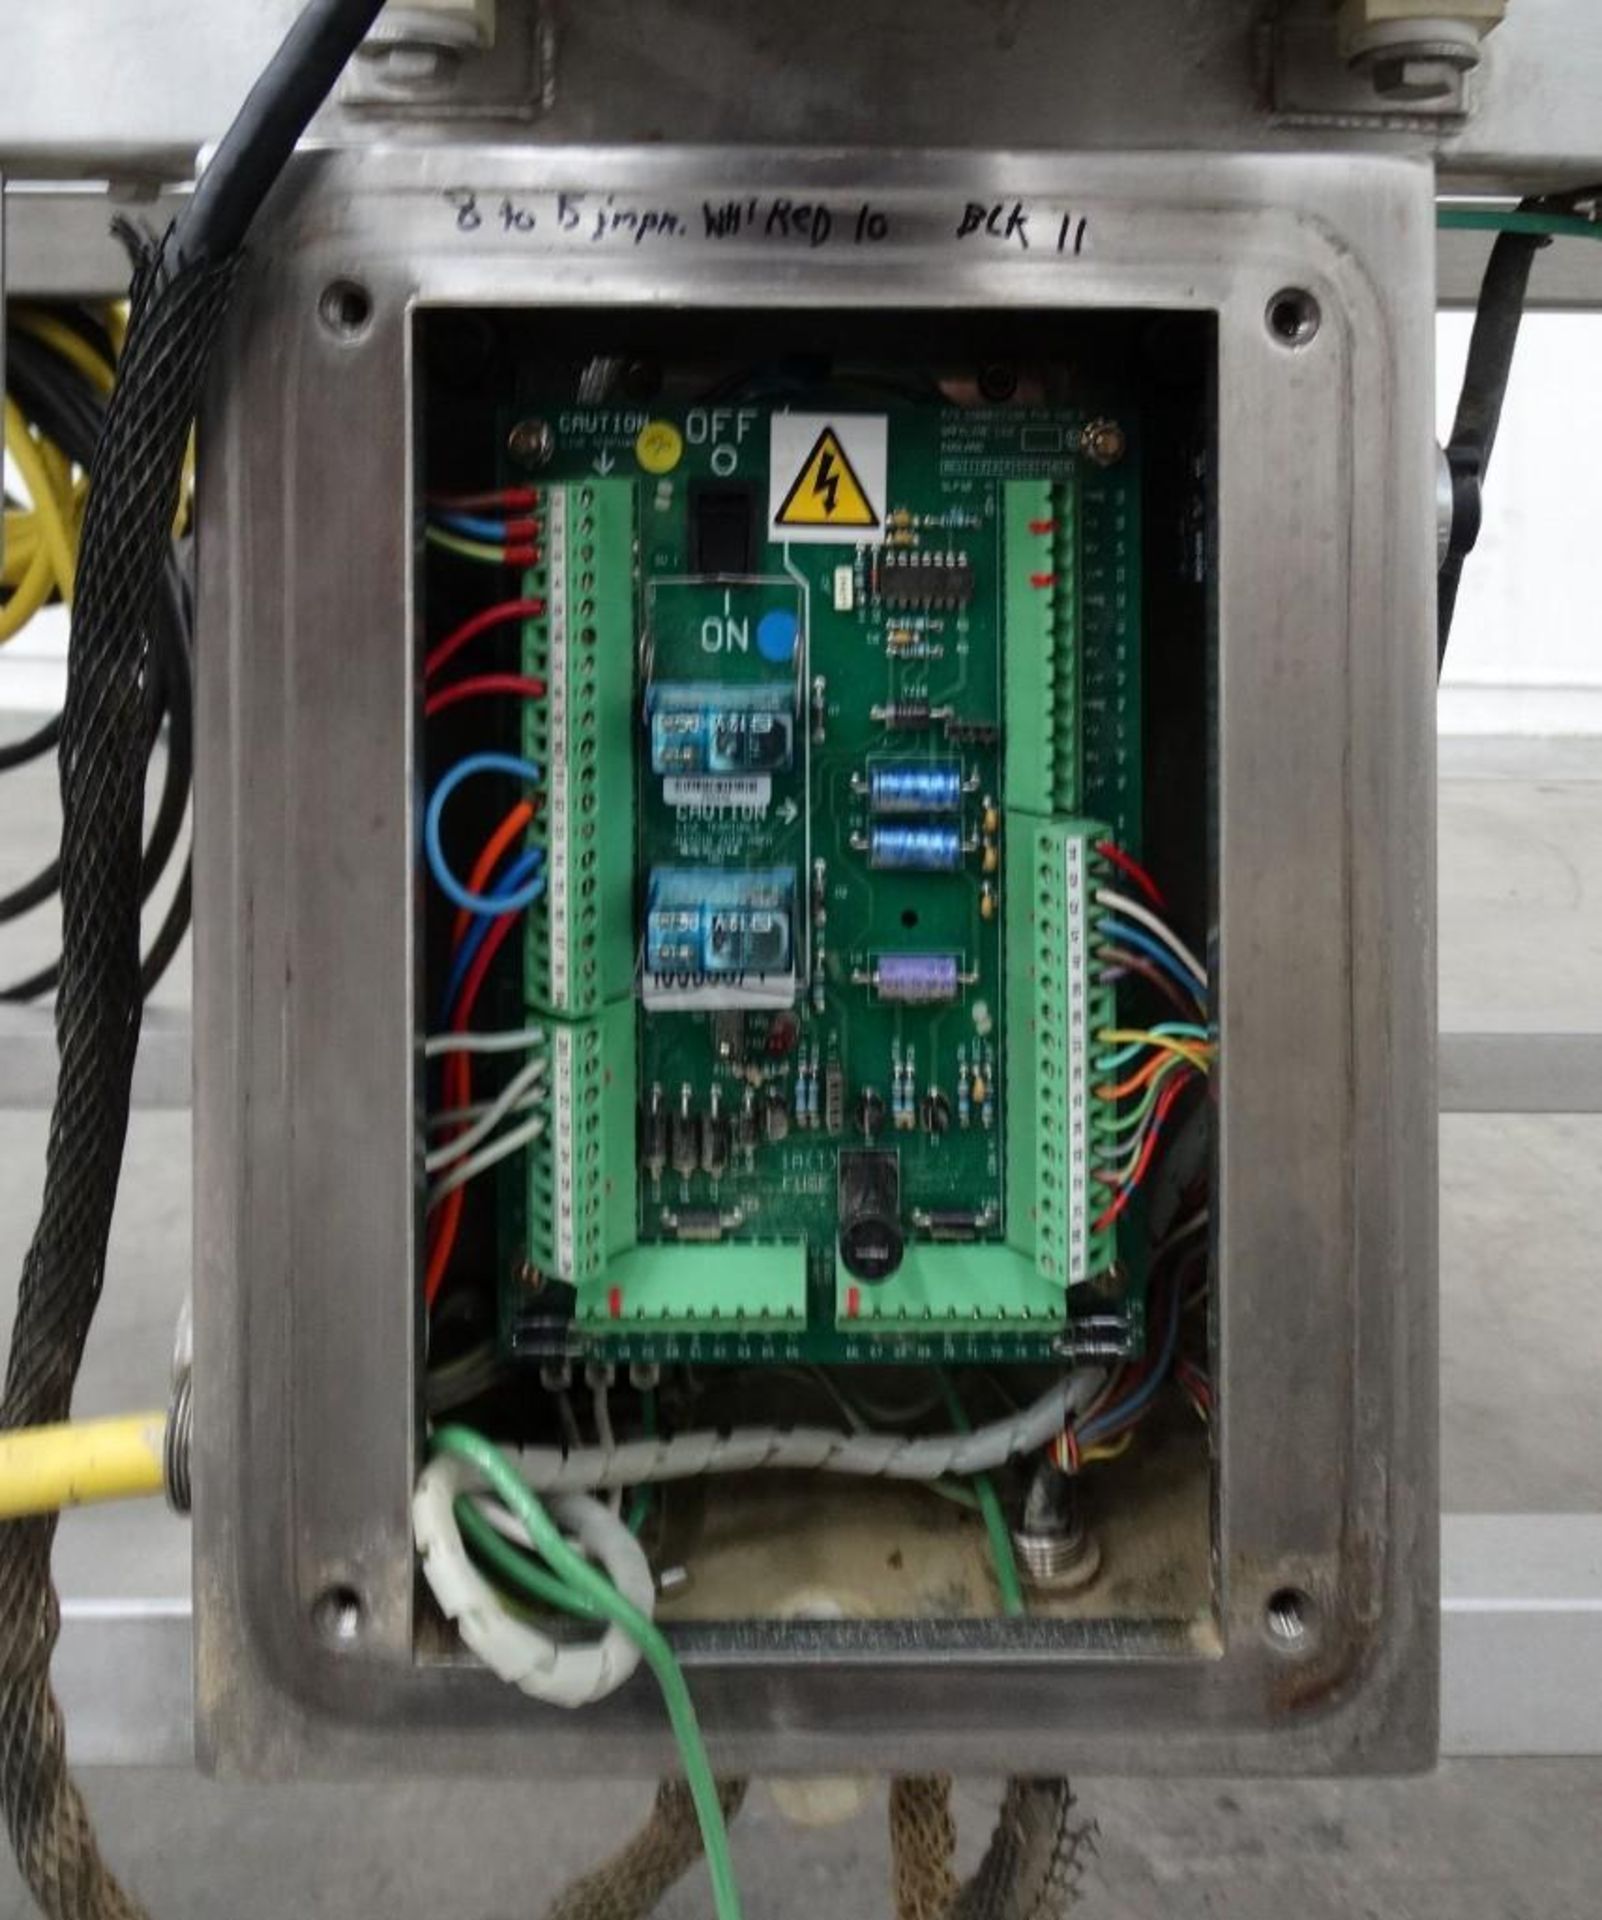 Safeline Metal Detector with Conveyor 3" x 11" - Image 7 of 7